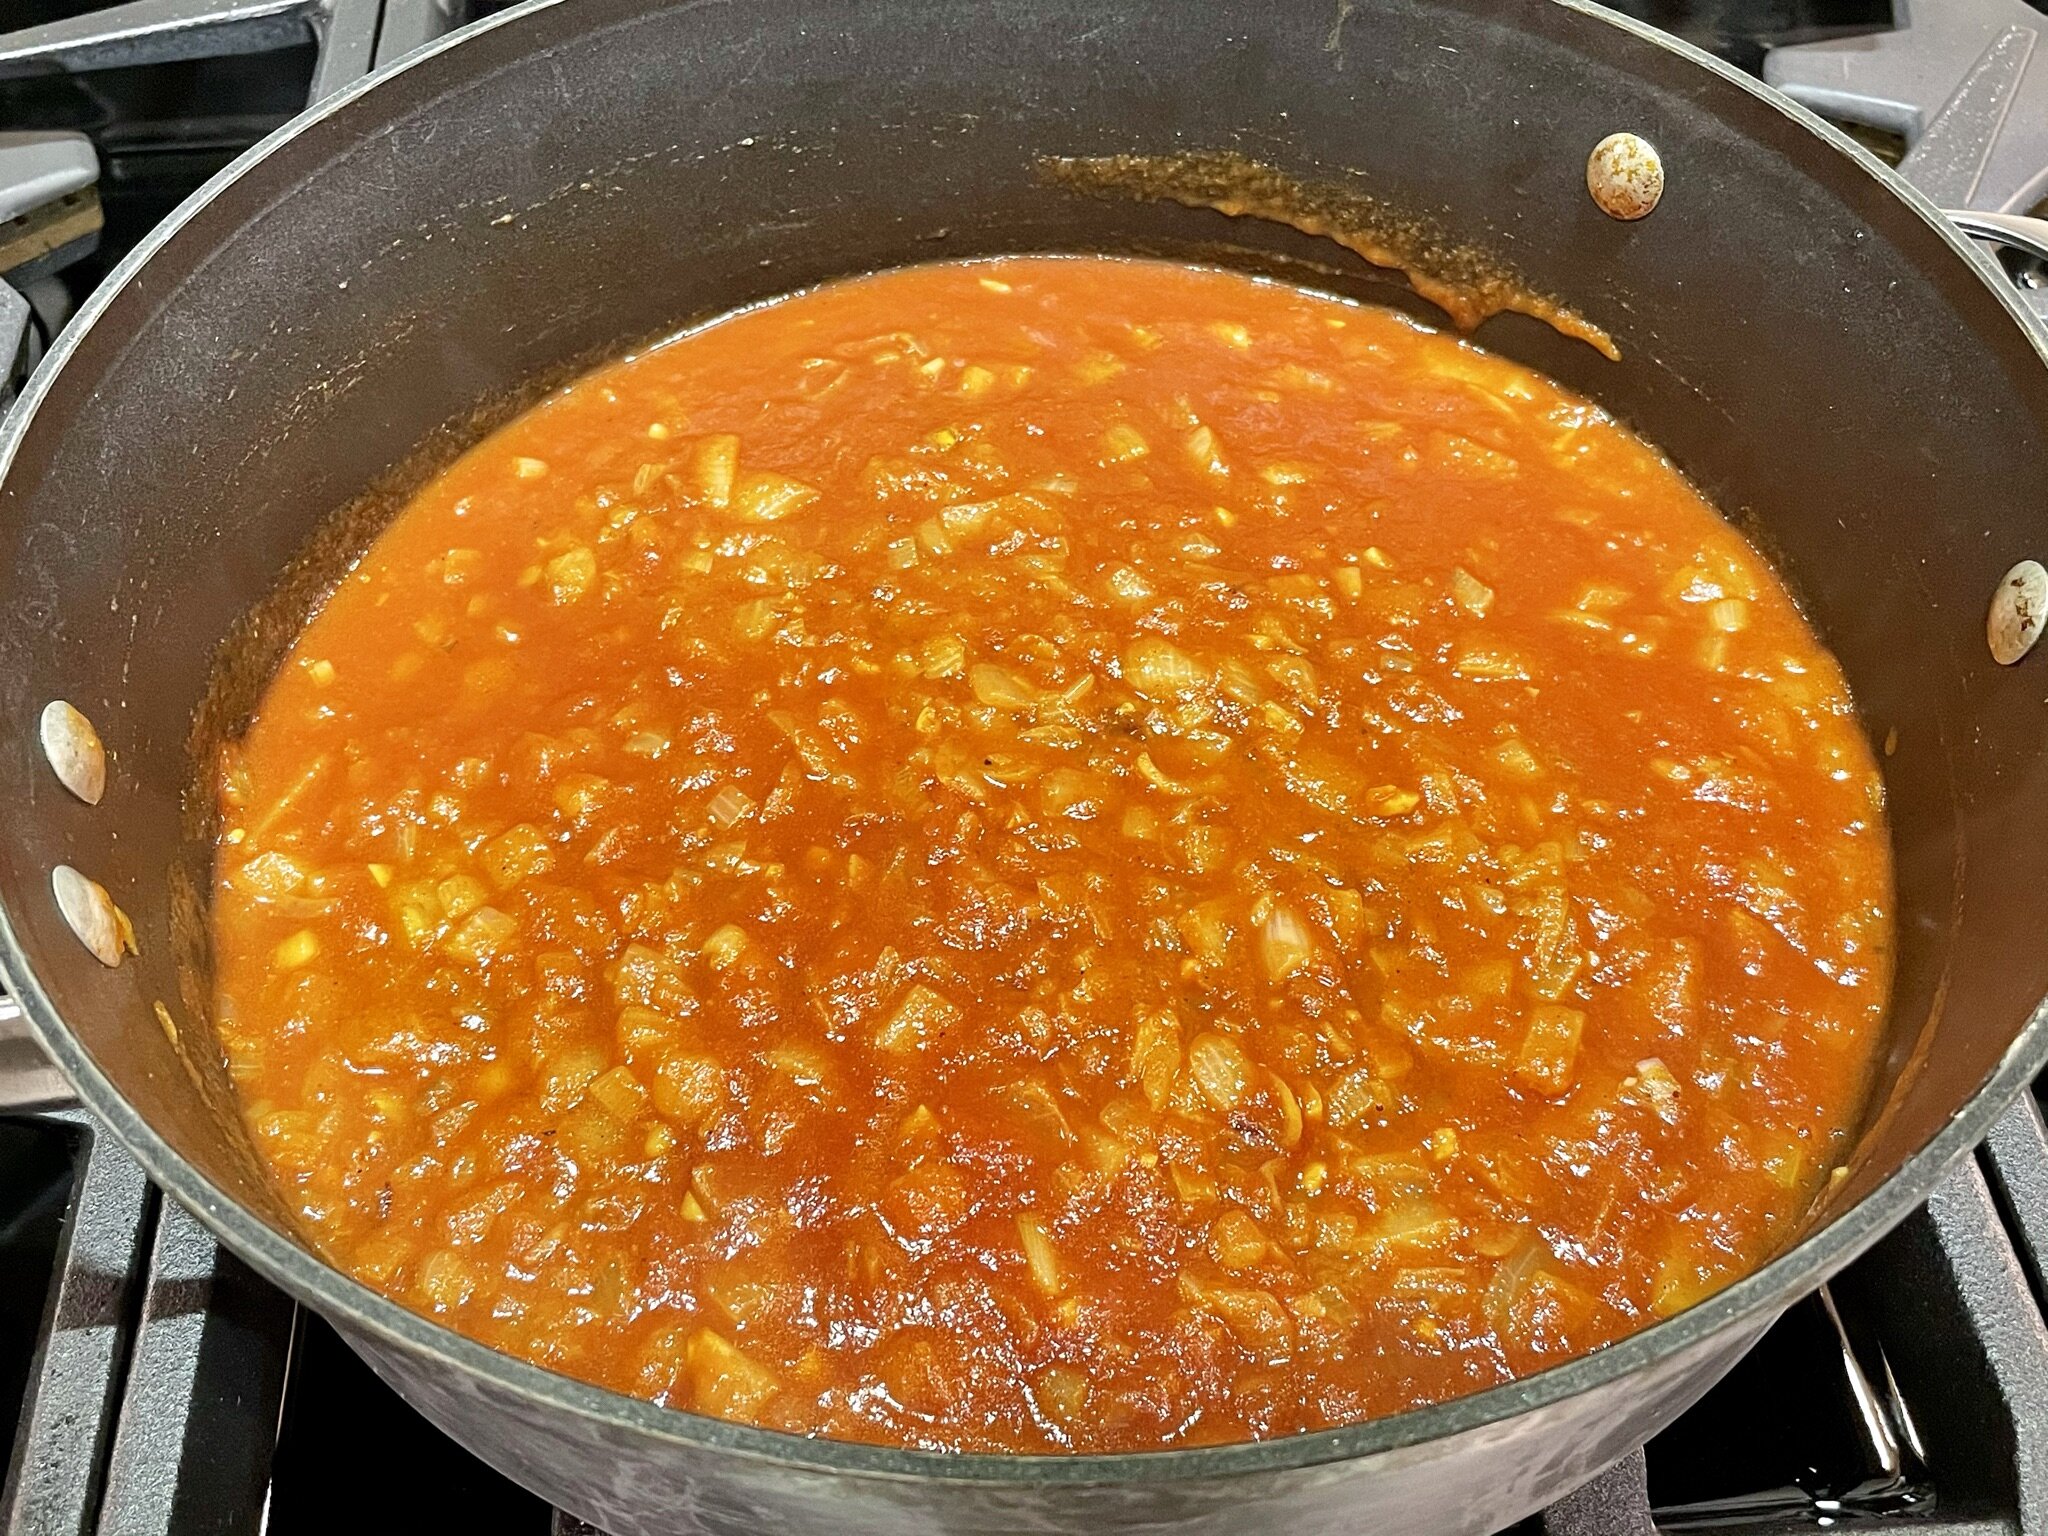 Tomato sauce combined.